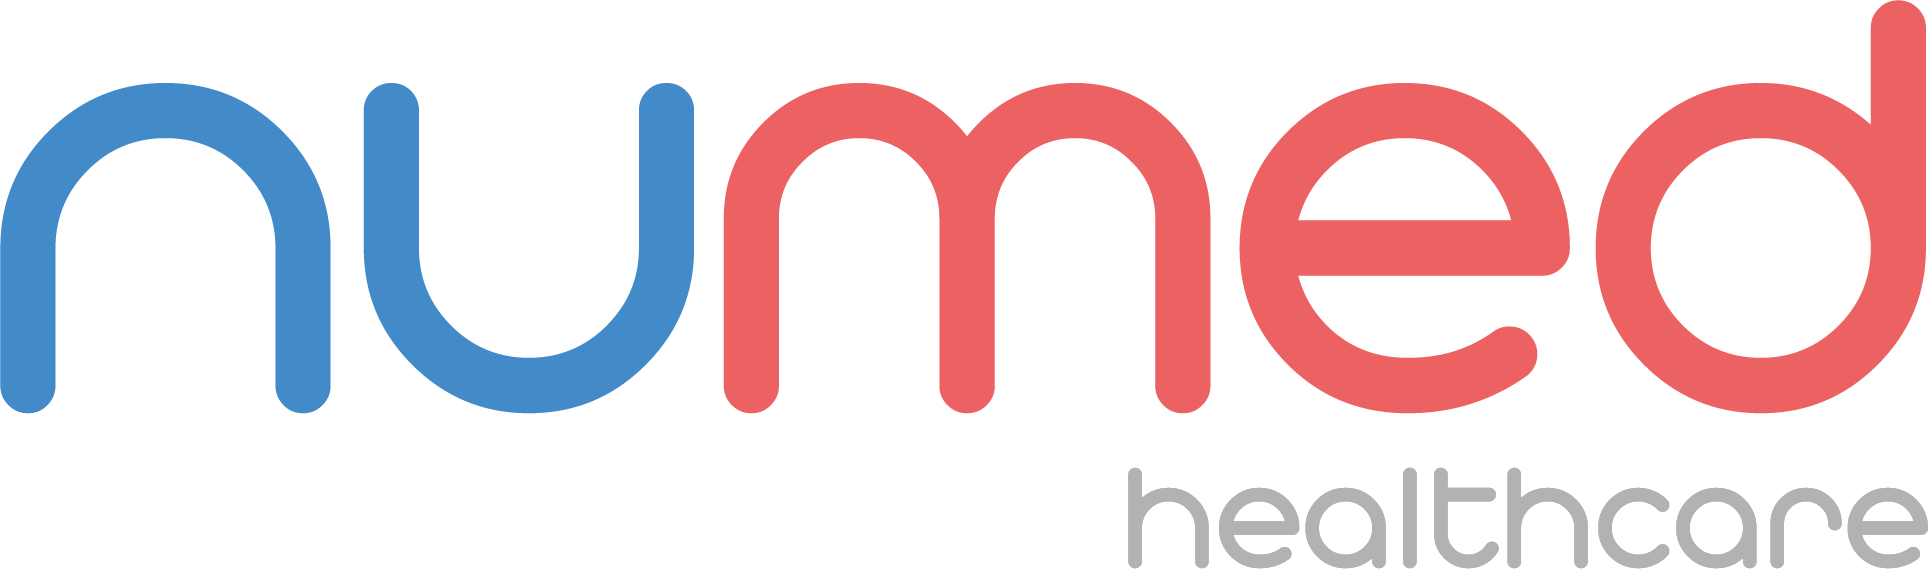 Logo for Numed Healthcare - SpiroConnect Spirometer